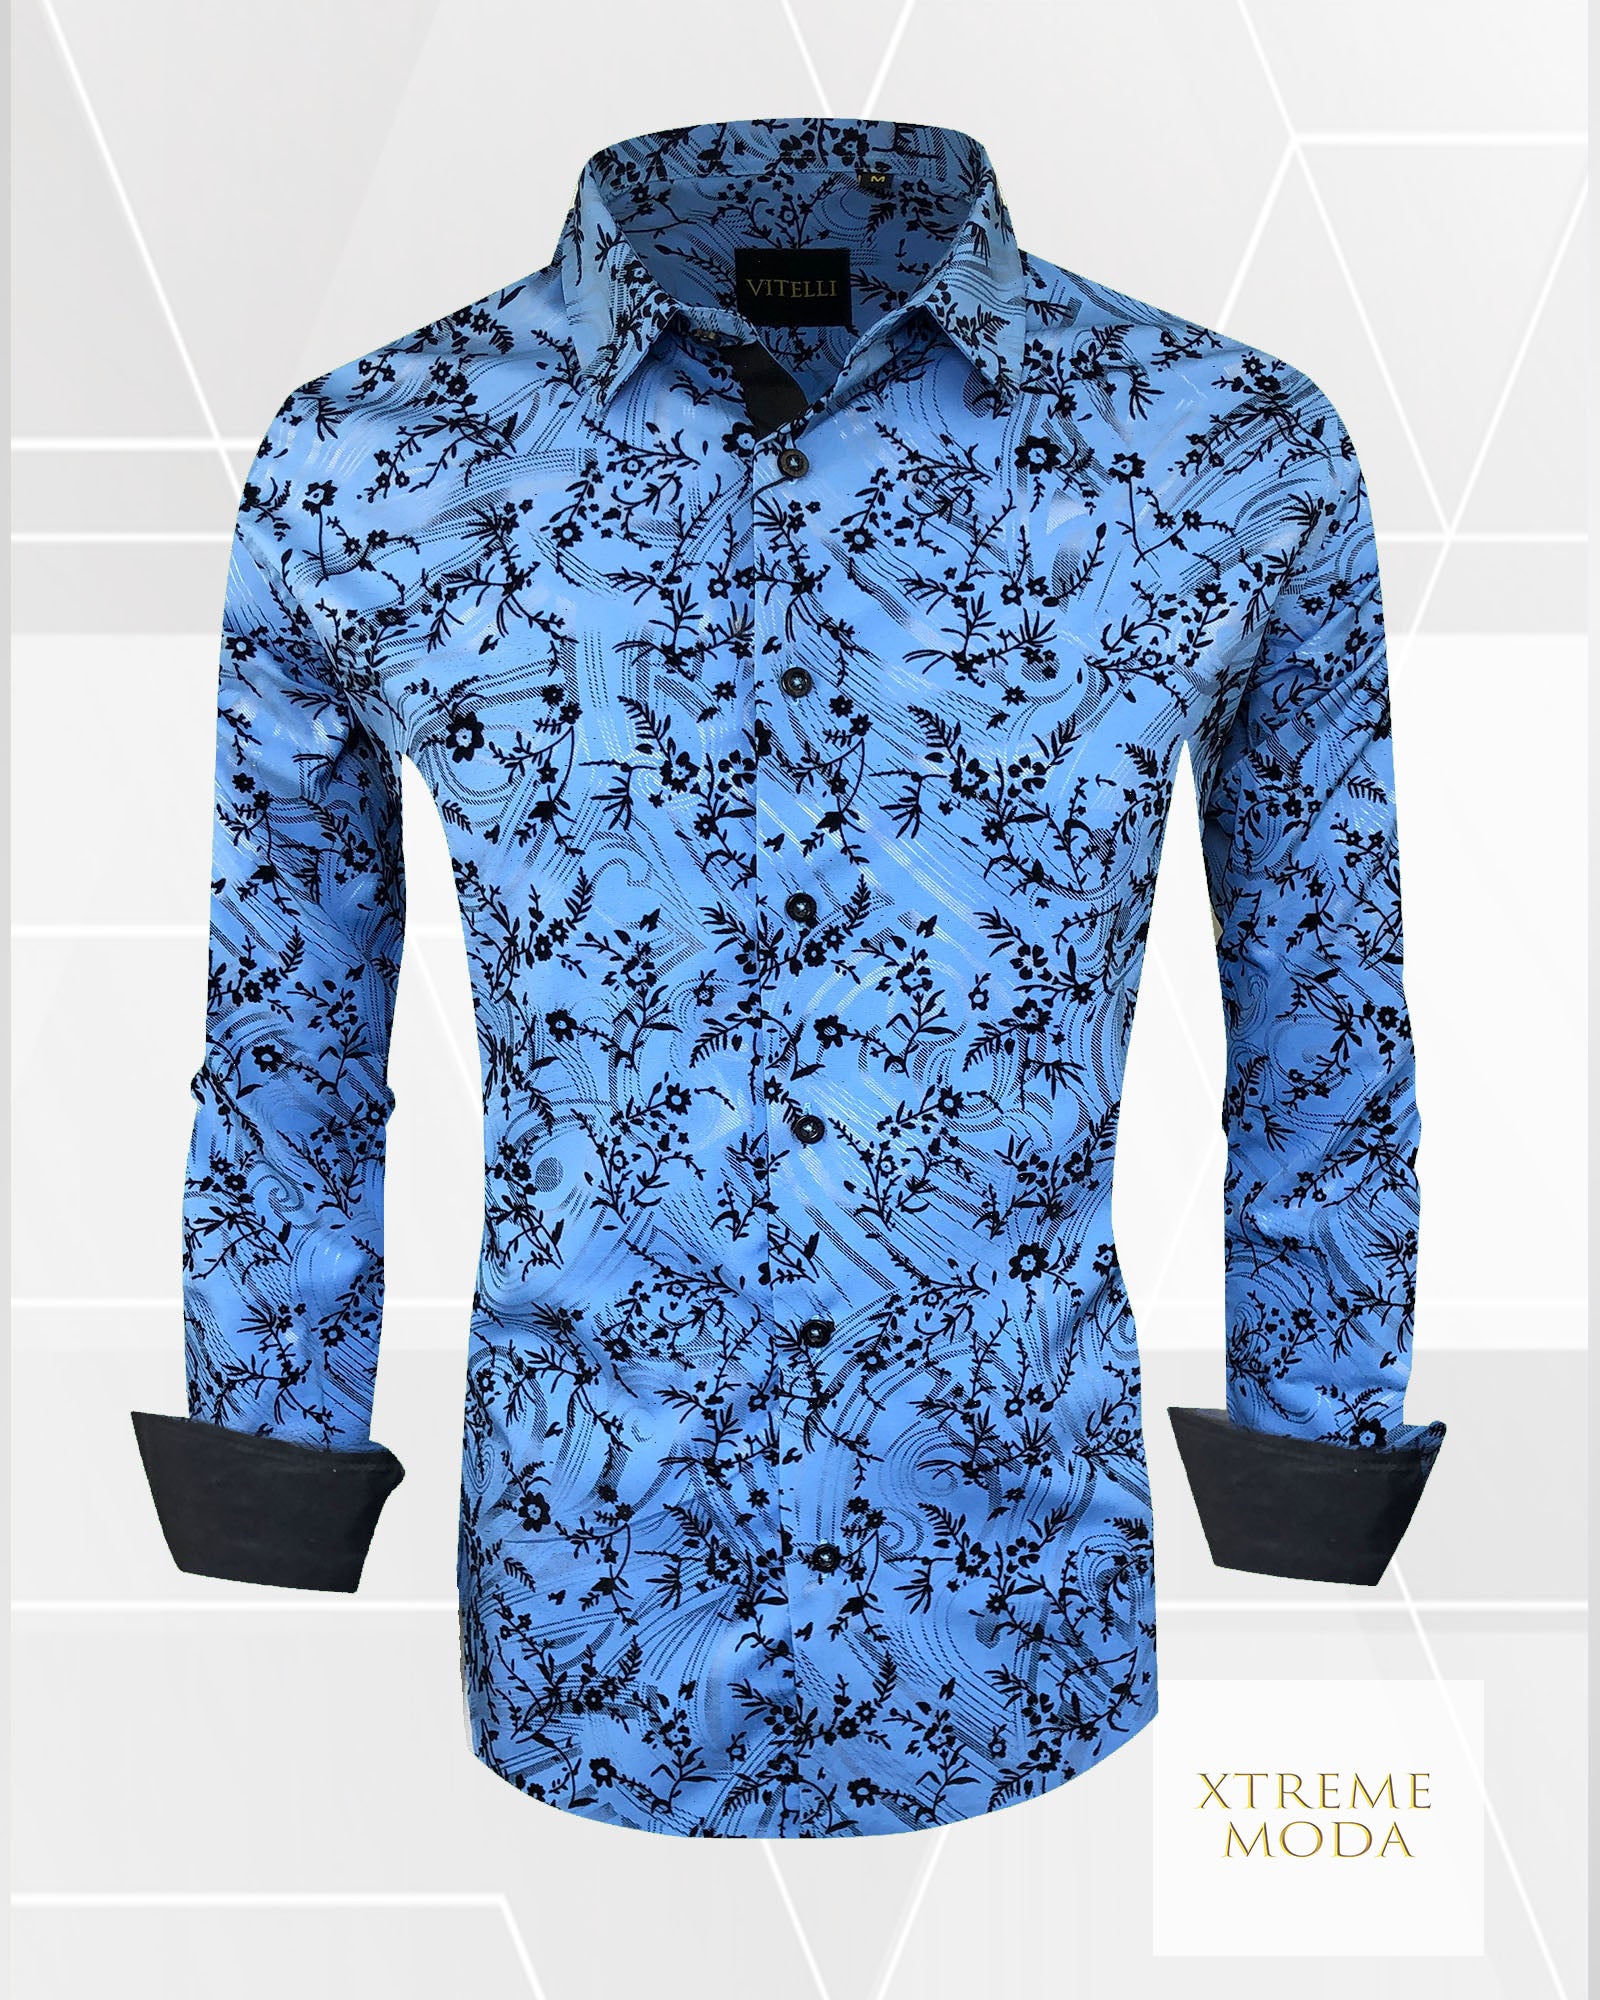 Vitelli modern fit fashion shirt blue